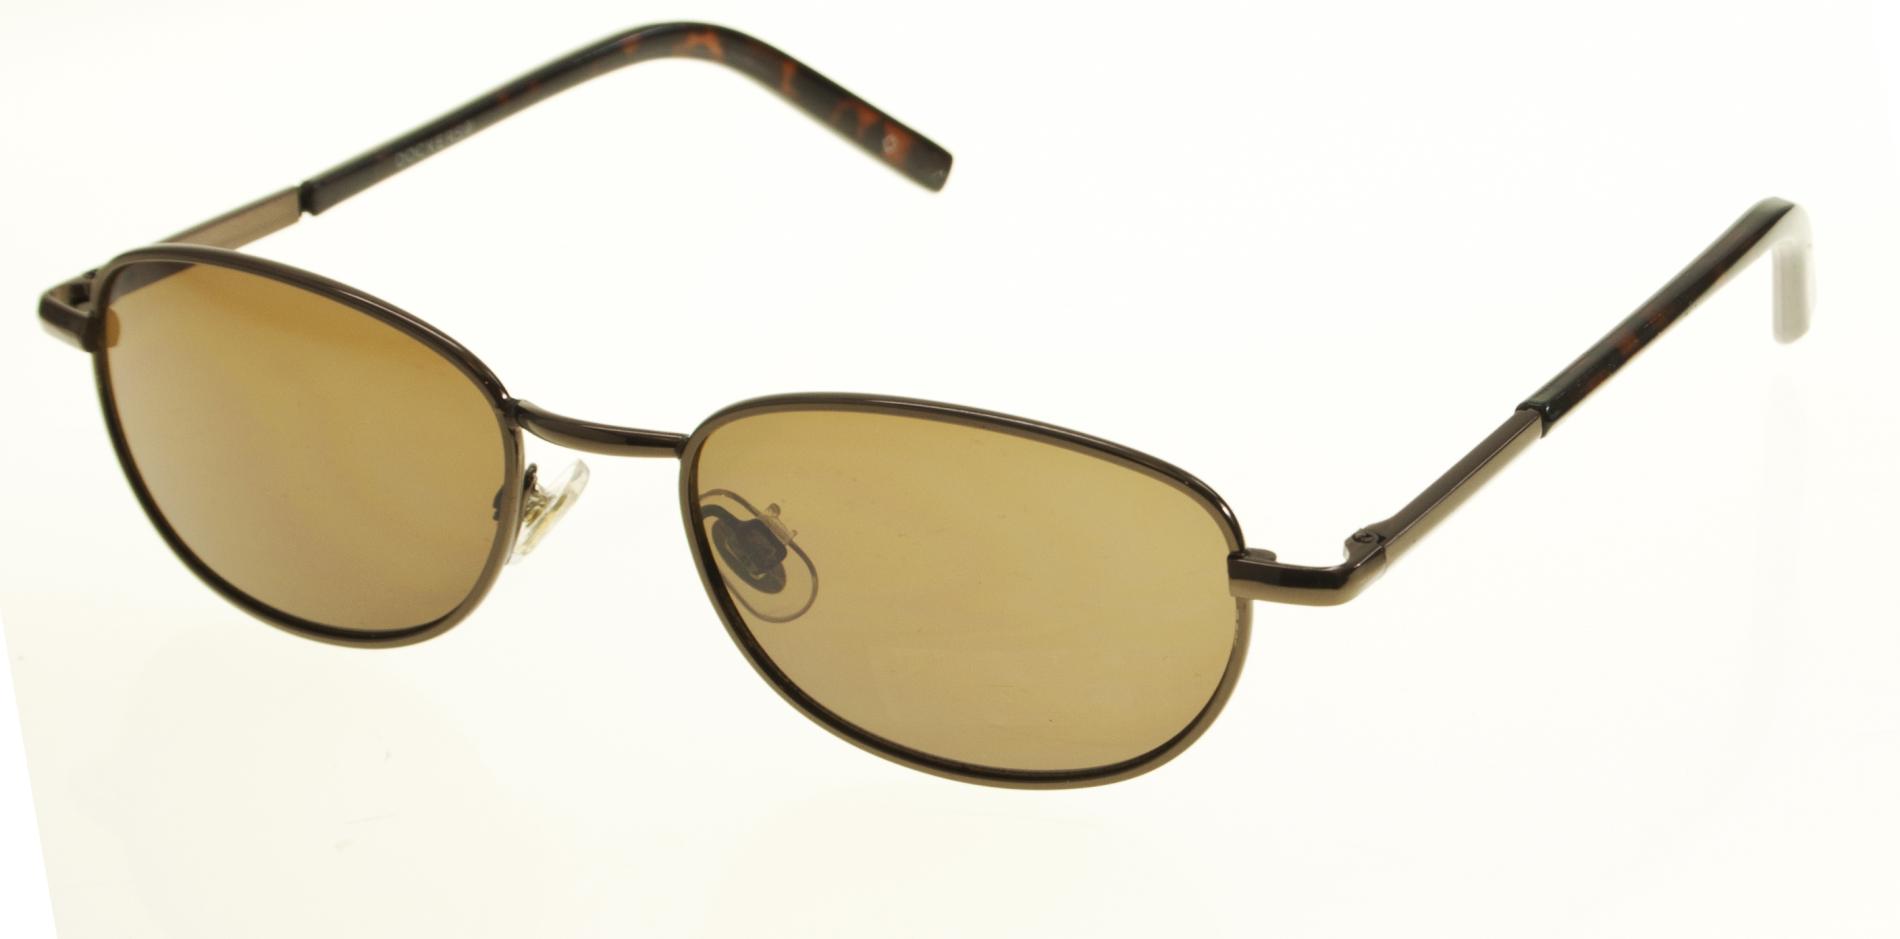 Dockers Women's Oval Tortoiseshell Sunglasses